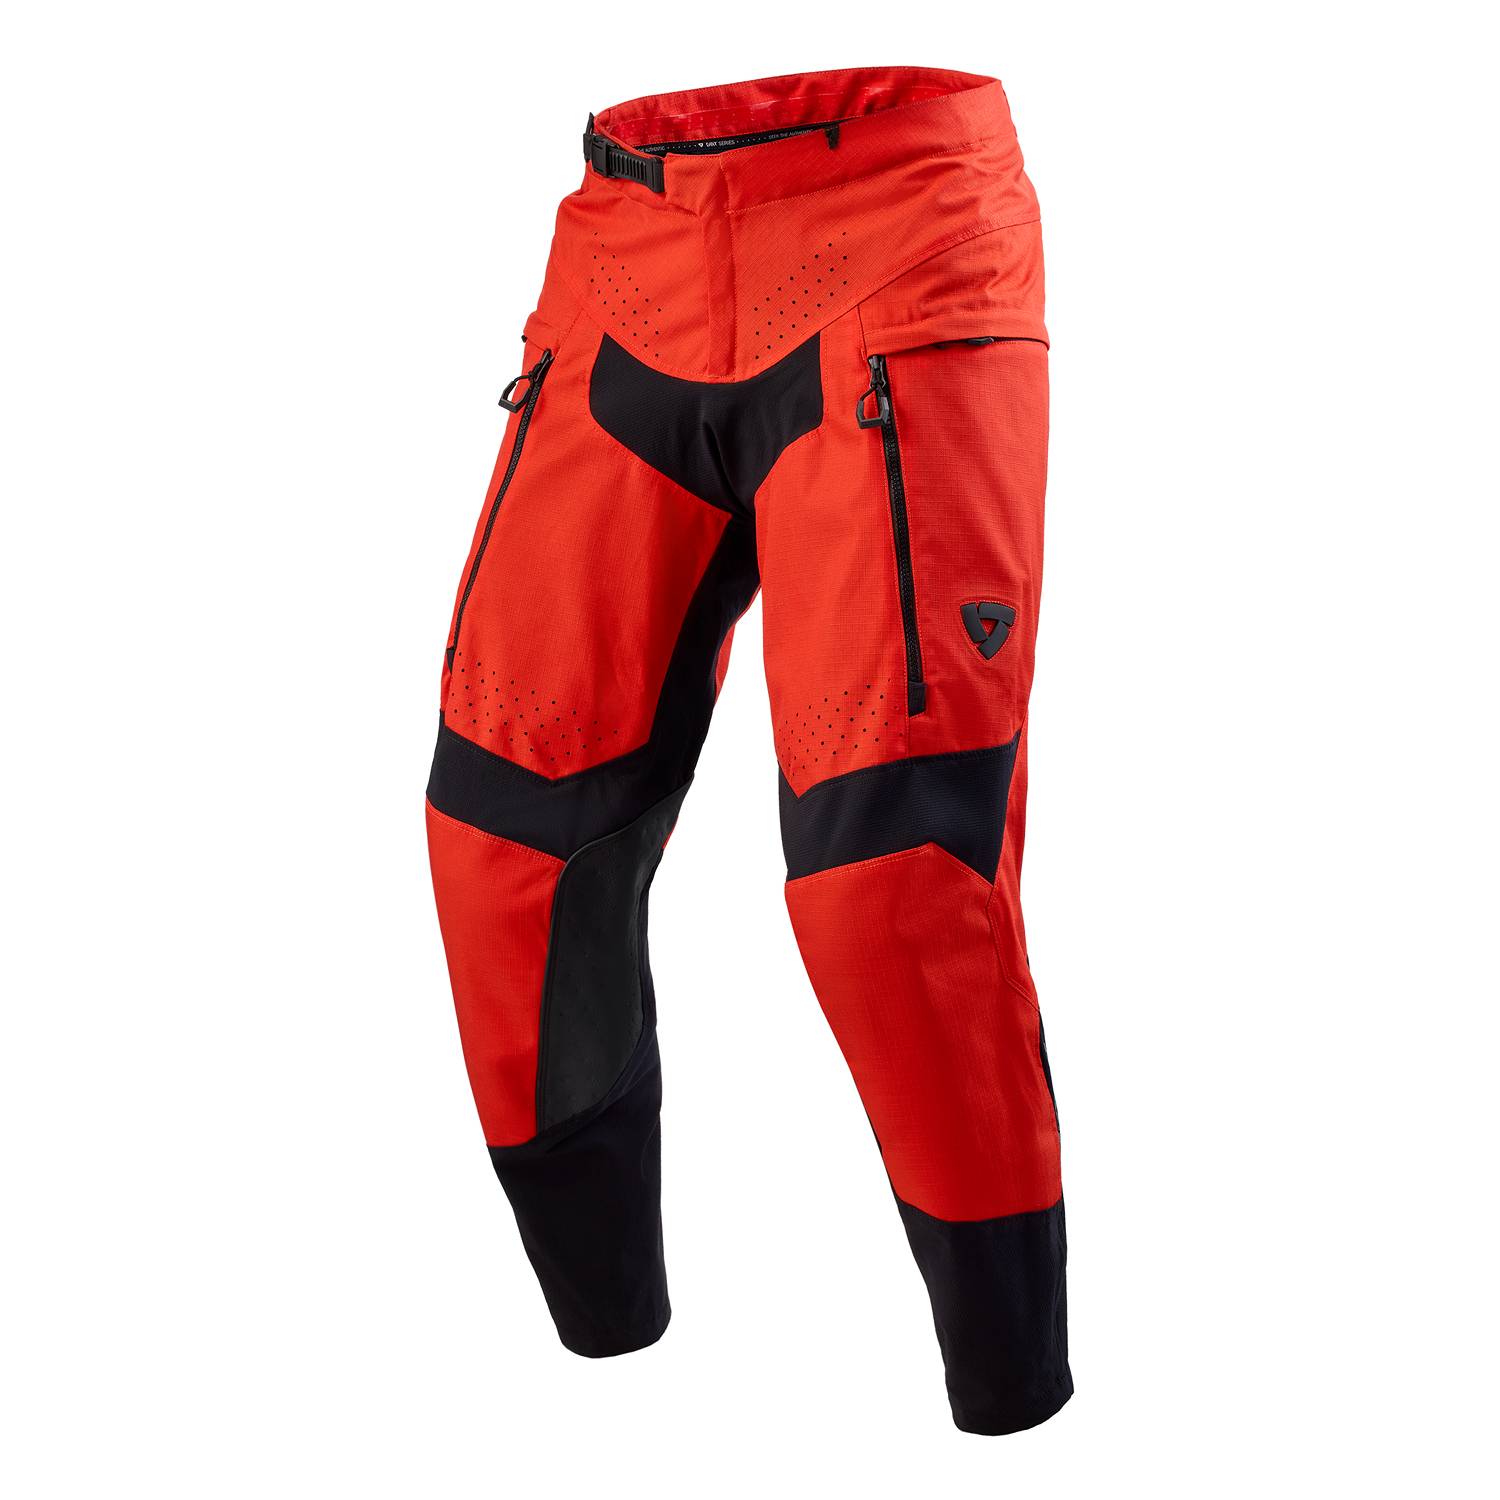 Image of REV'IT! Pants Peninsula Red Short Motorcycle Pants Size L ID 8700001349079